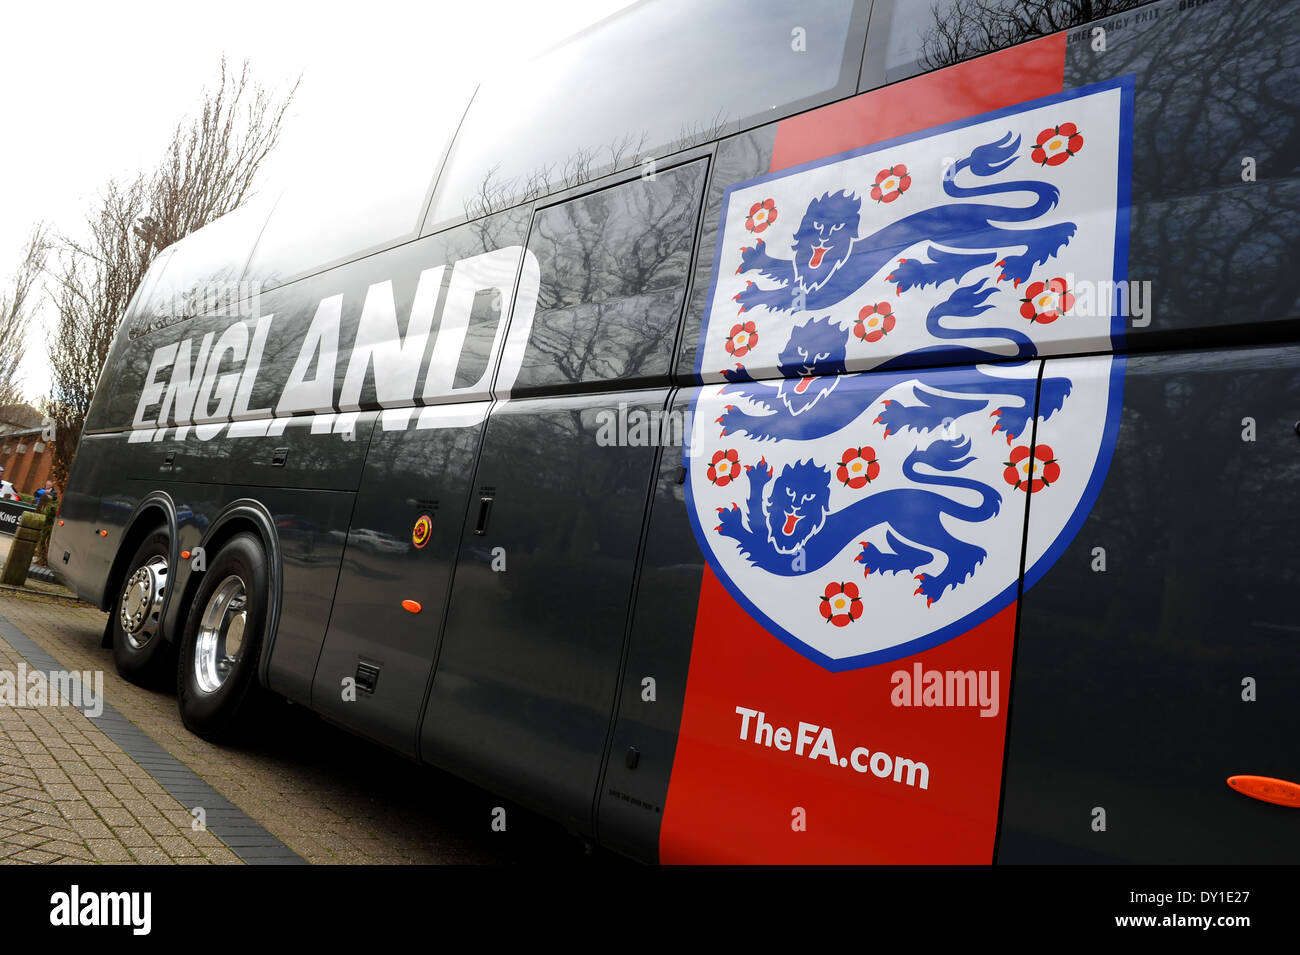 England Football Team bus, UK Stock Photo